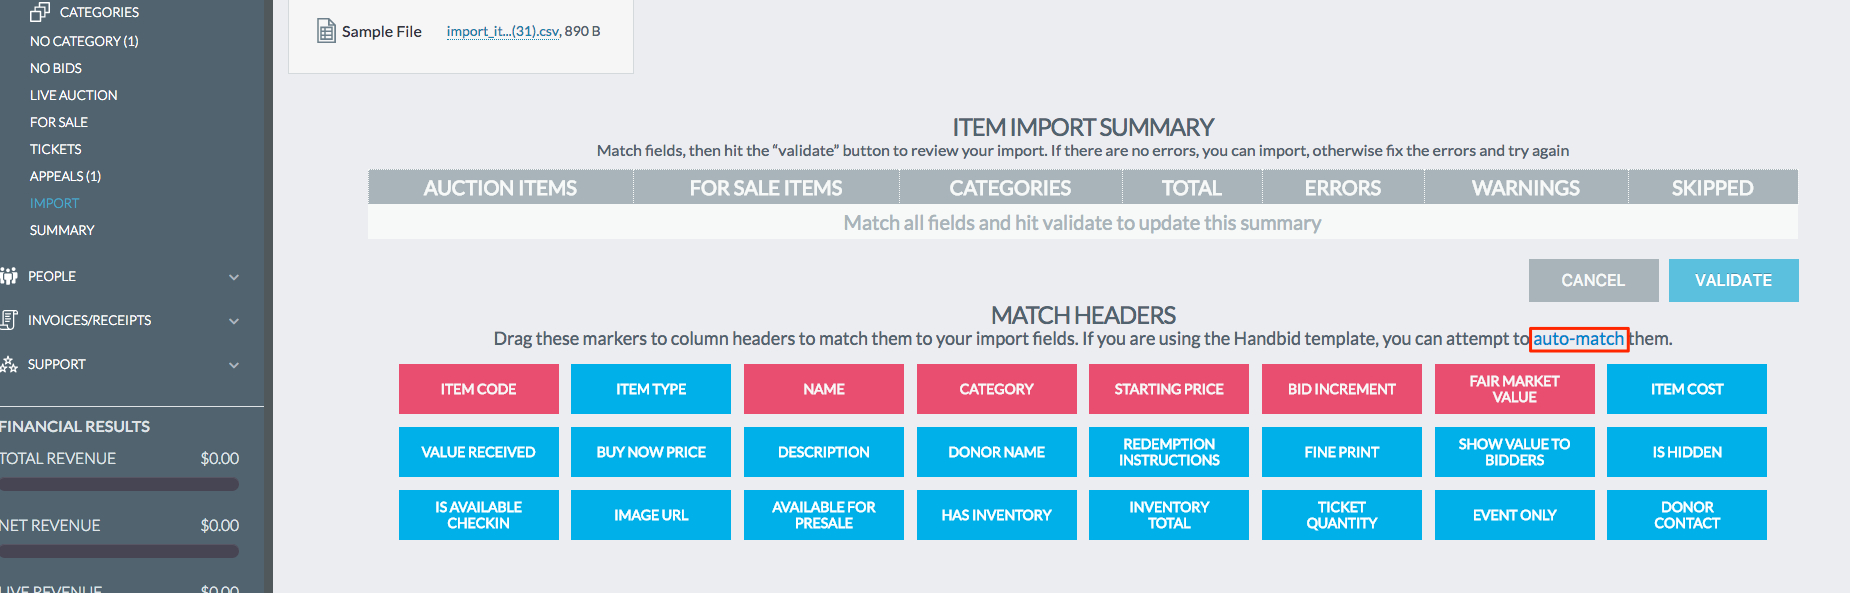 Live Auction Spreadsheet Within Importing Items Into Handbid – Handbid Knowledge Base